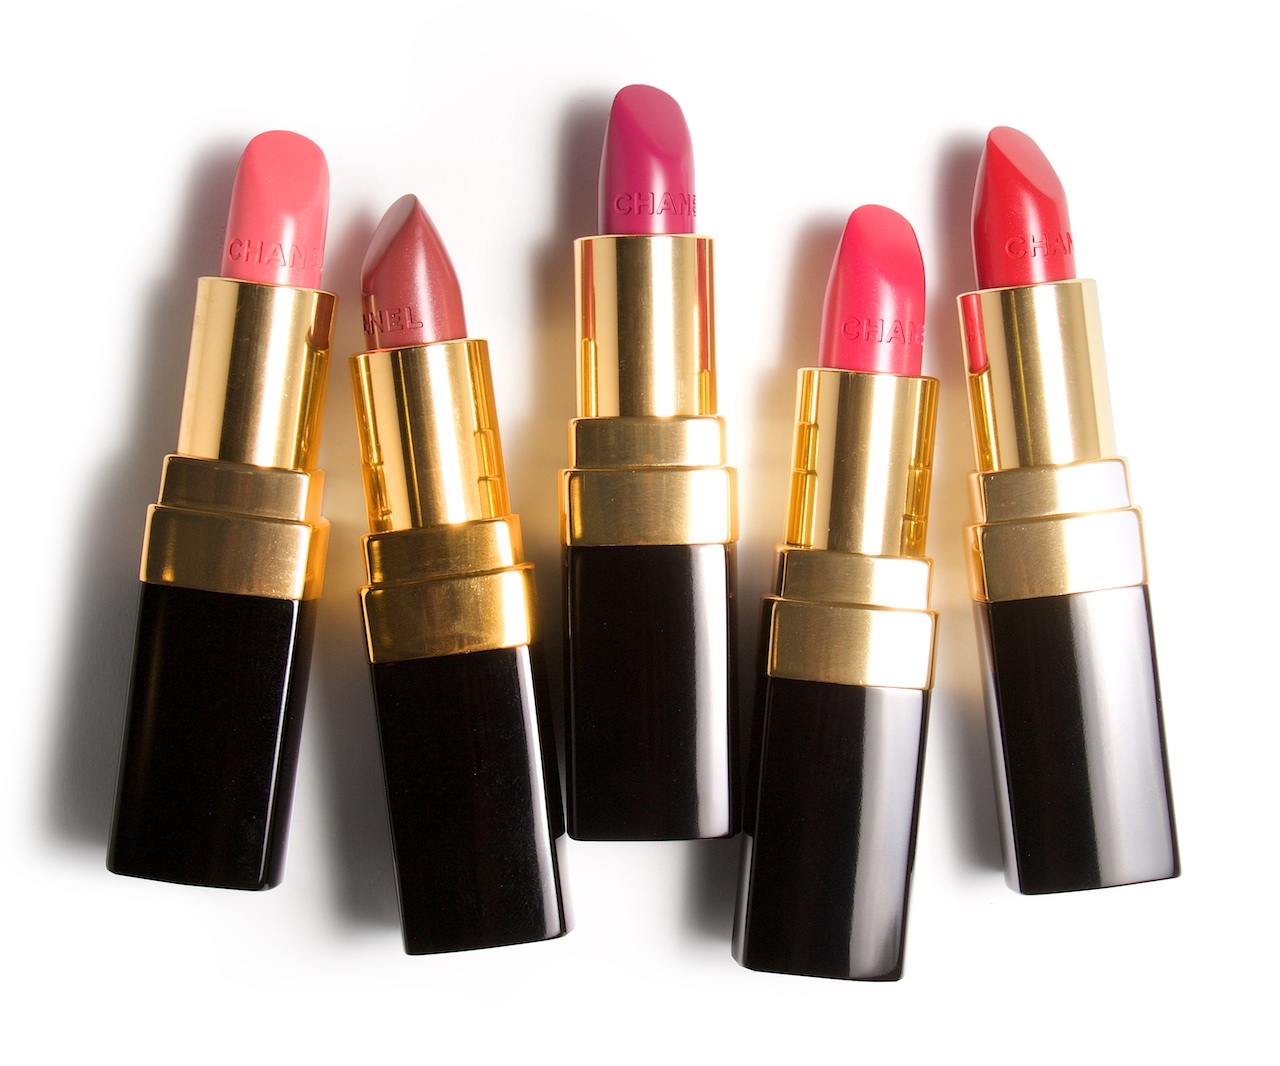 CHANEL Rouge Coco Shine  Chanel rouge coco shine Soft summer makeup  Hydrating lip color